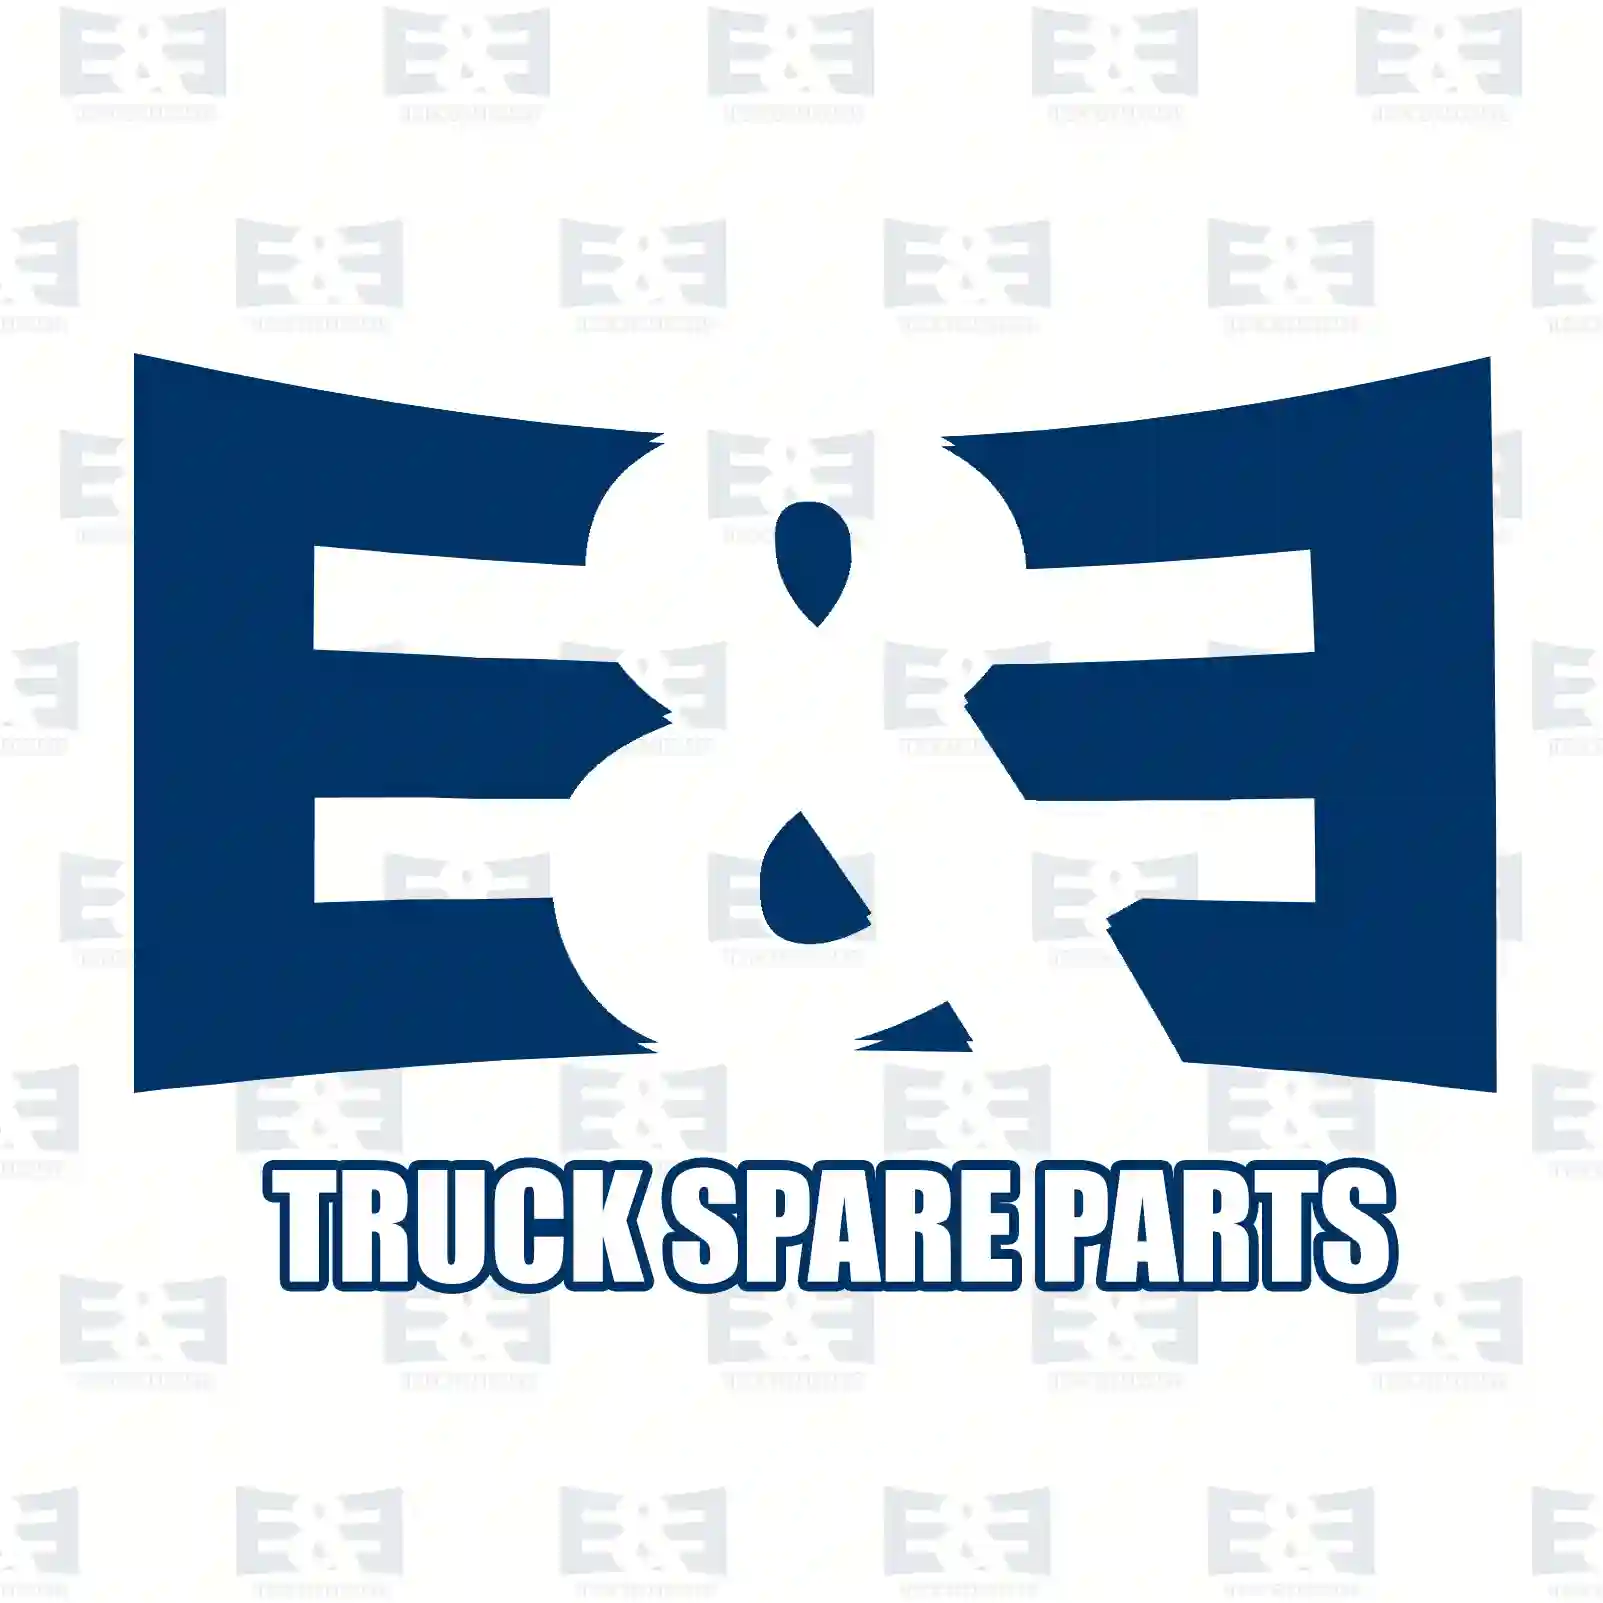 Disc brake pad kit, 2E2296693, 07663999, 1502946, 1506551, 1571570, 01906111, 01906157, 01906167, 1906111, 1906157, 07663711, SFP500220, GBP287, GBP292, GBP663, GBP90290, RTC4518, STC9187 ||  2E2296693 E&E Truck Spare Parts | Truck Spare Parts, Auotomotive Spare Parts Disc brake pad kit, 2E2296693, 07663999, 1502946, 1506551, 1571570, 01906111, 01906157, 01906167, 1906111, 1906157, 07663711, SFP500220, GBP287, GBP292, GBP663, GBP90290, RTC4518, STC9187 ||  2E2296693 E&E Truck Spare Parts | Truck Spare Parts, Auotomotive Spare Parts